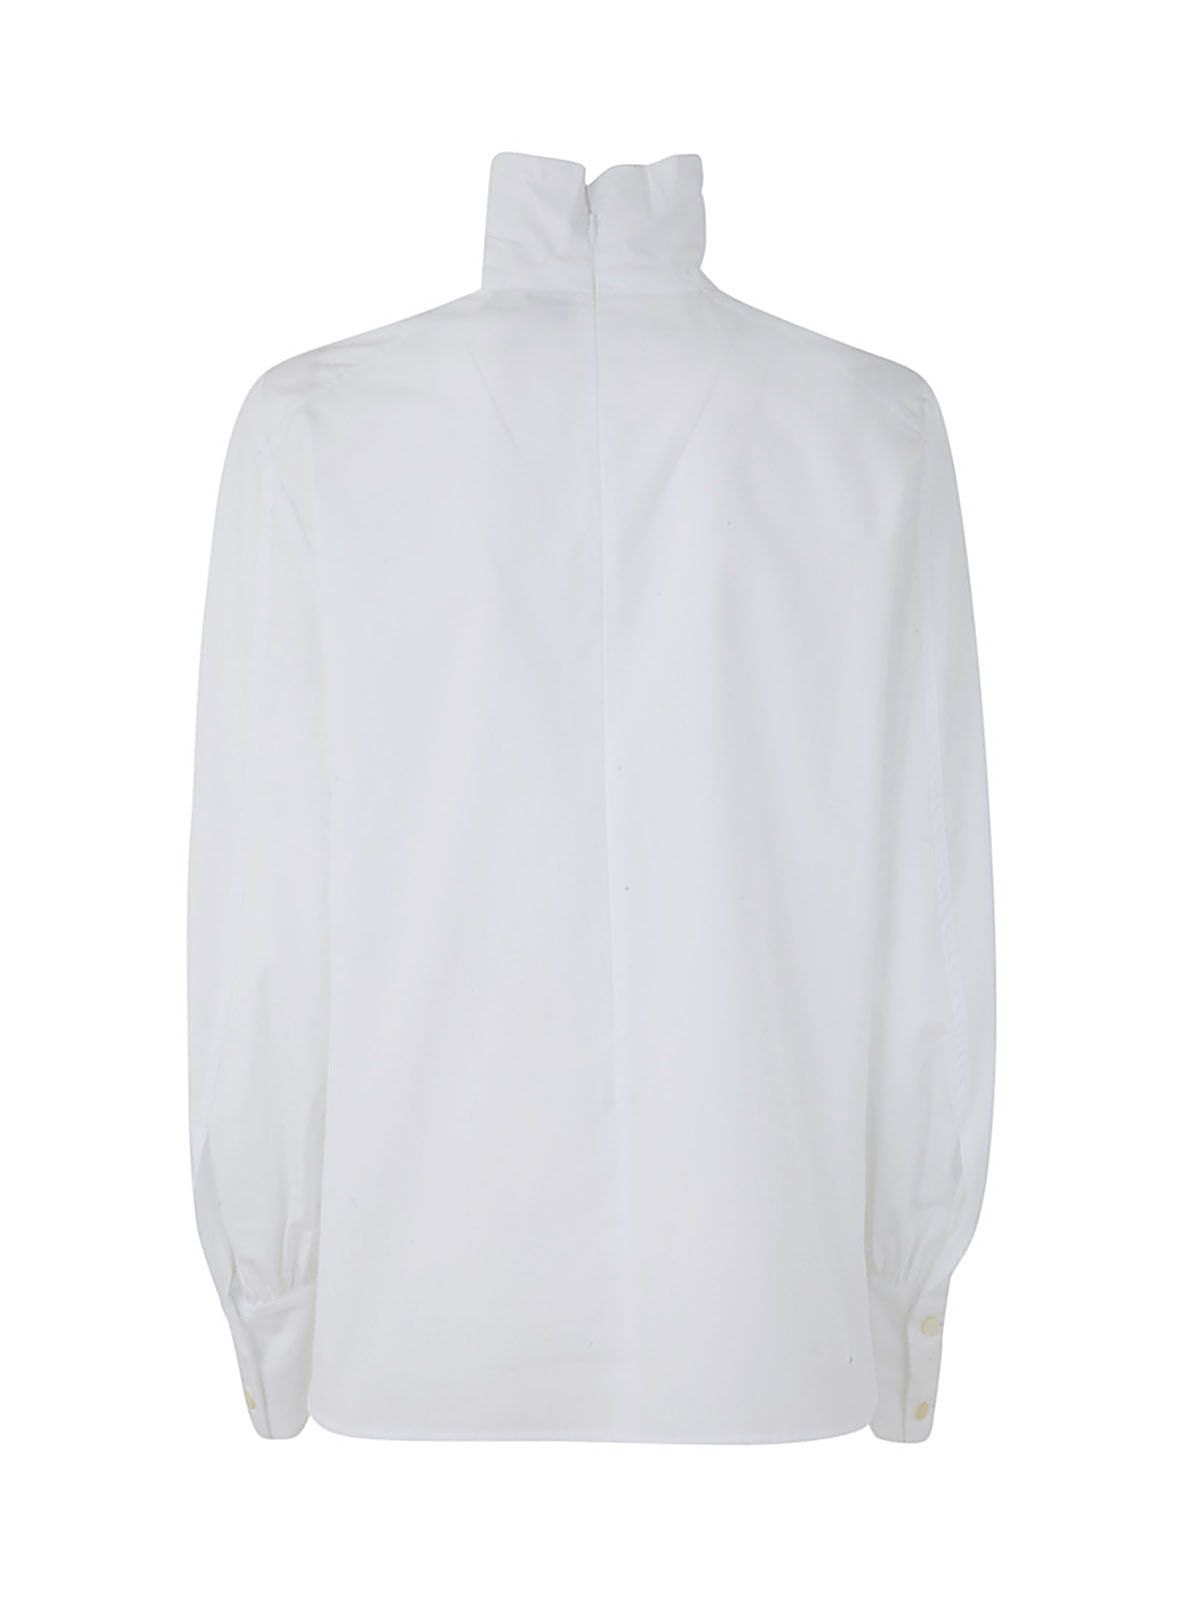 Shop Alberto Biani 's White High Neck Shirt| Bernardellistores.com